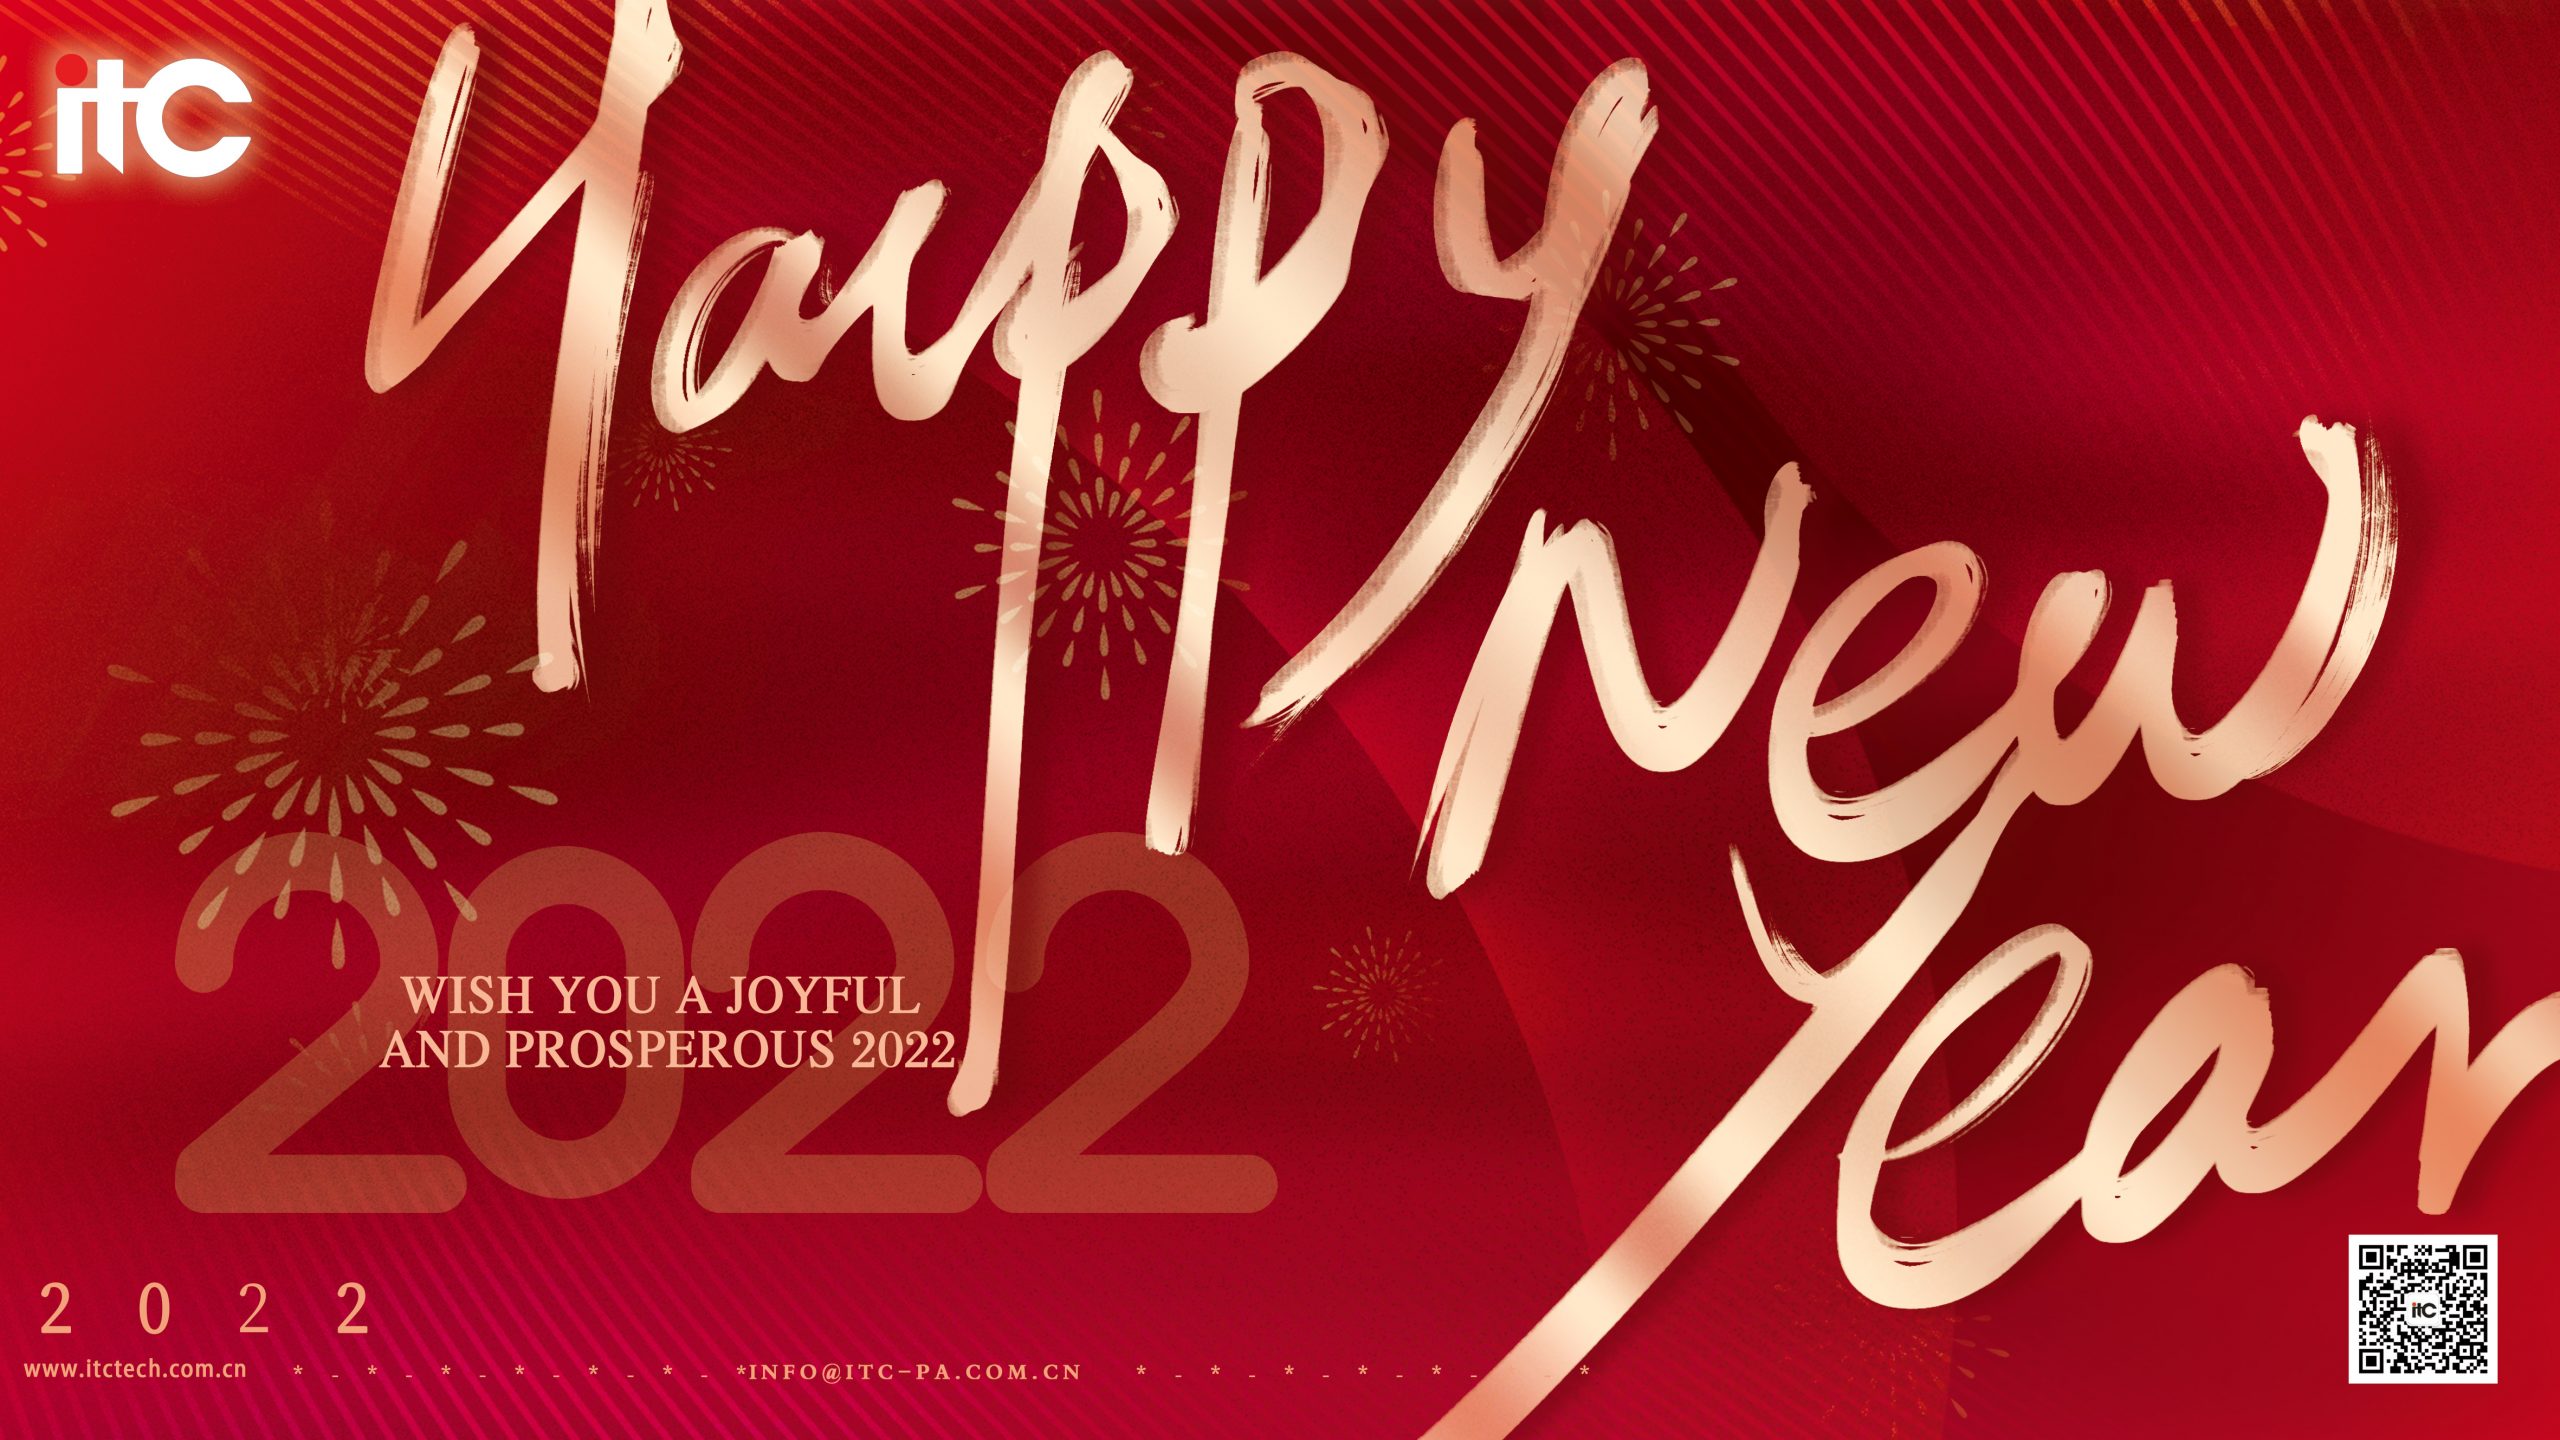 【Holiday Notice】Happy 2022 New Year!